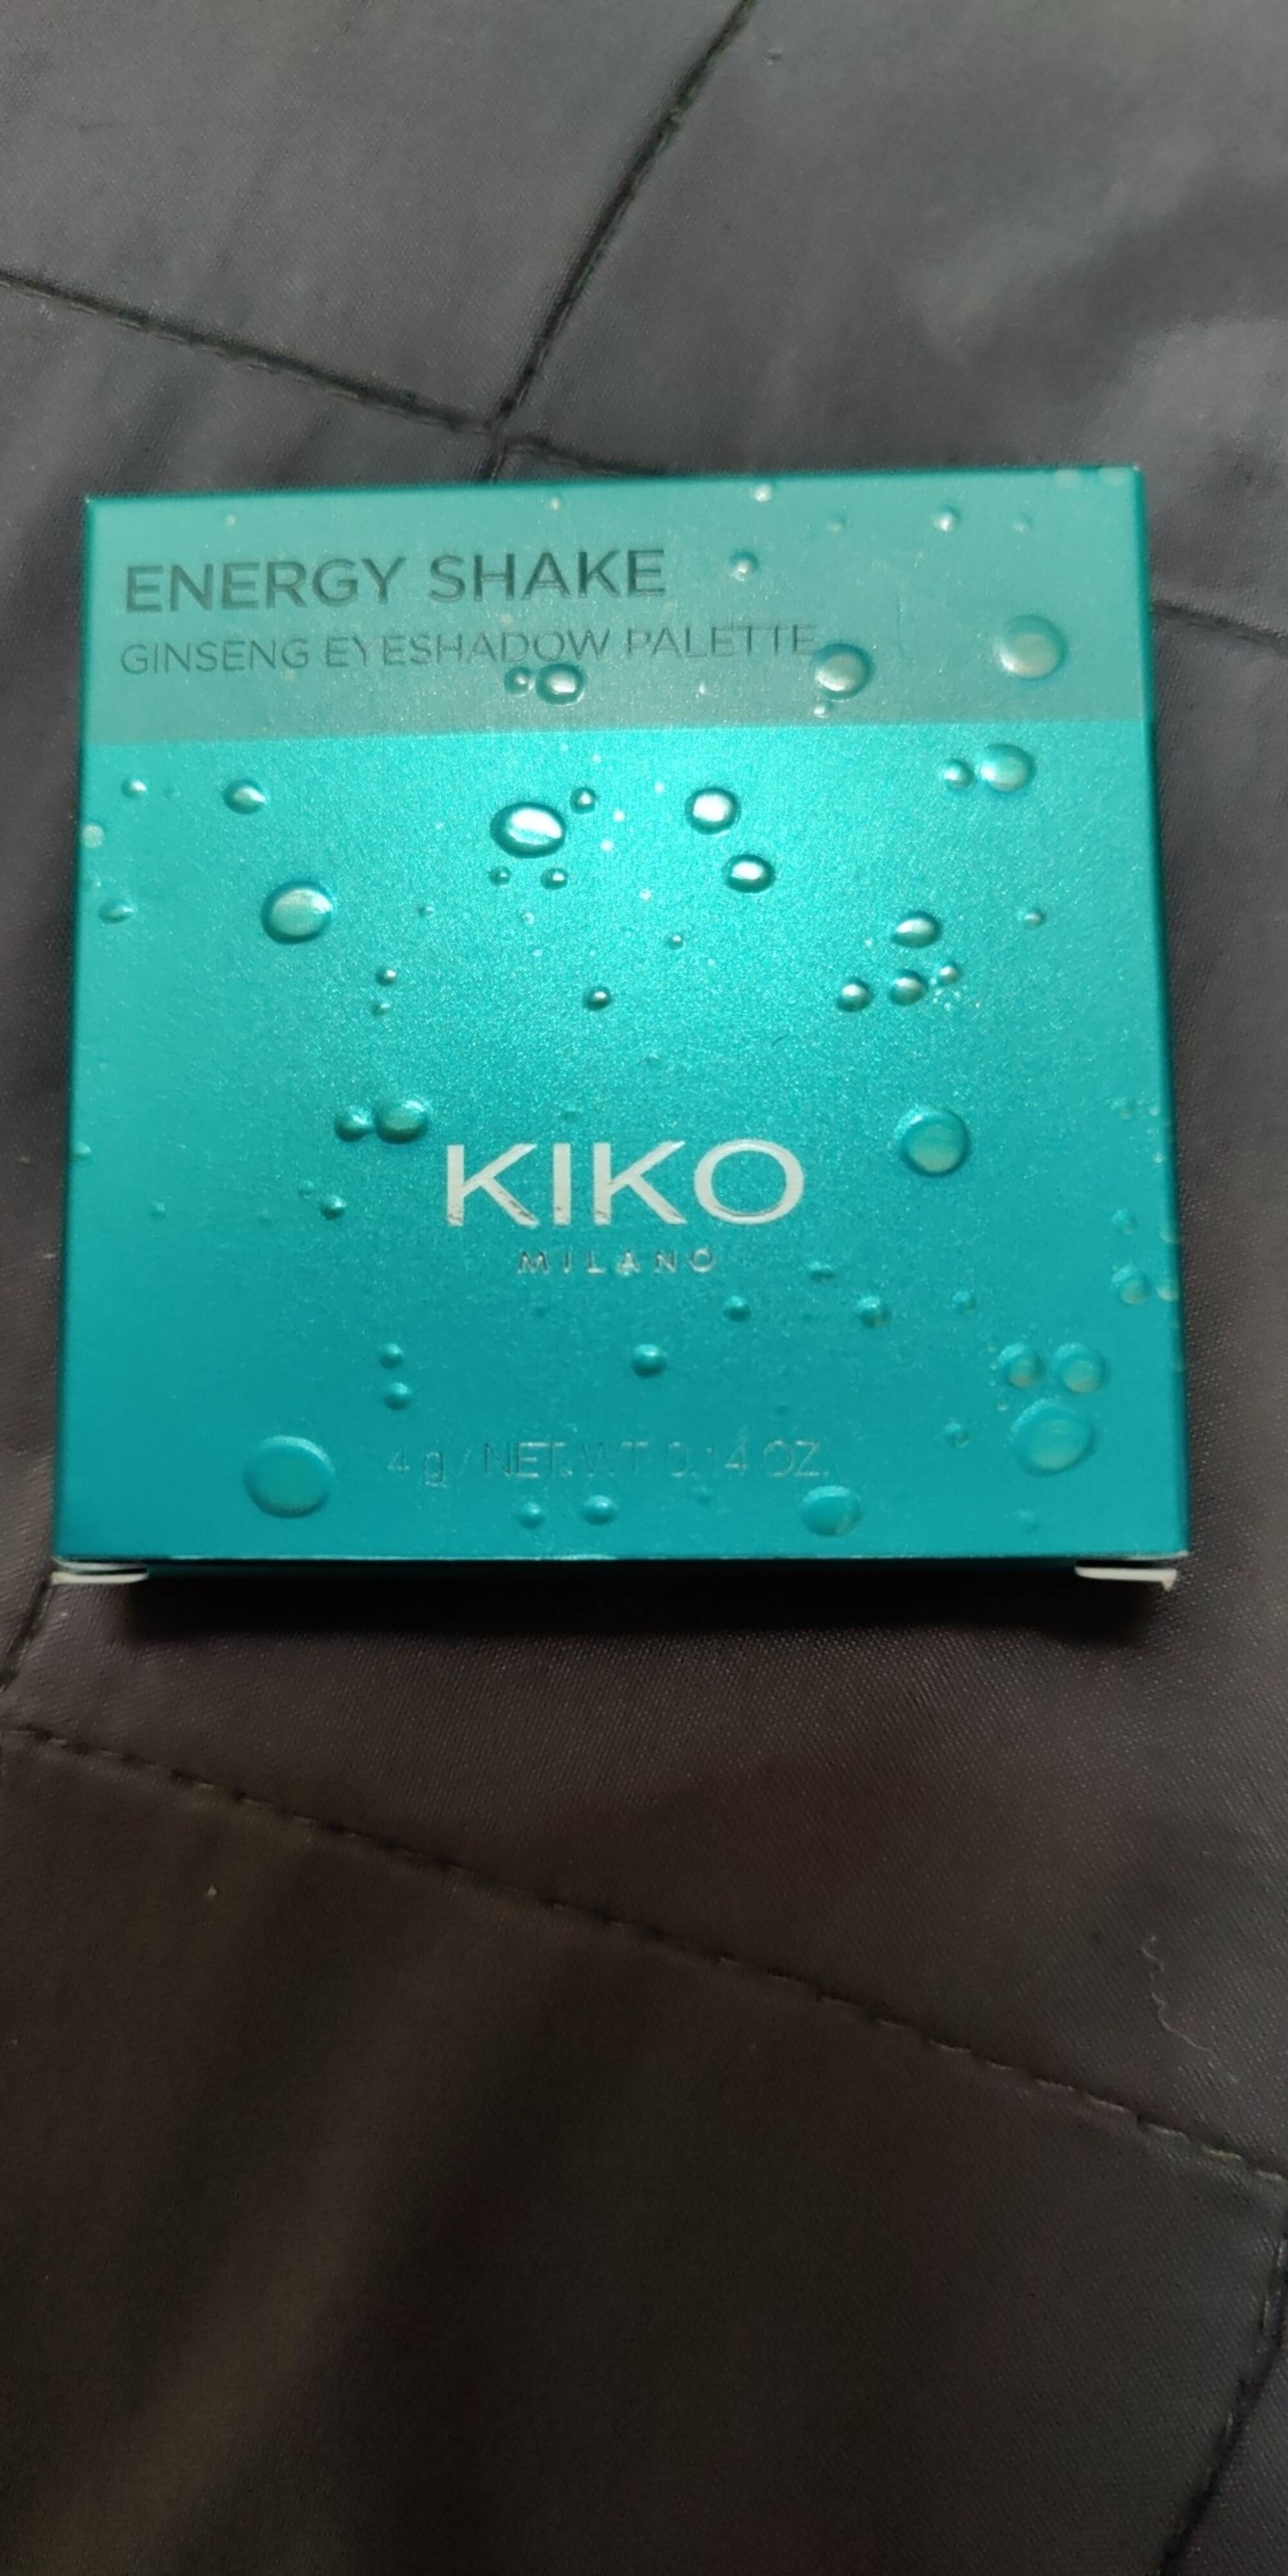 KIKO - Energy shake - Ginseng eyeshadow palette